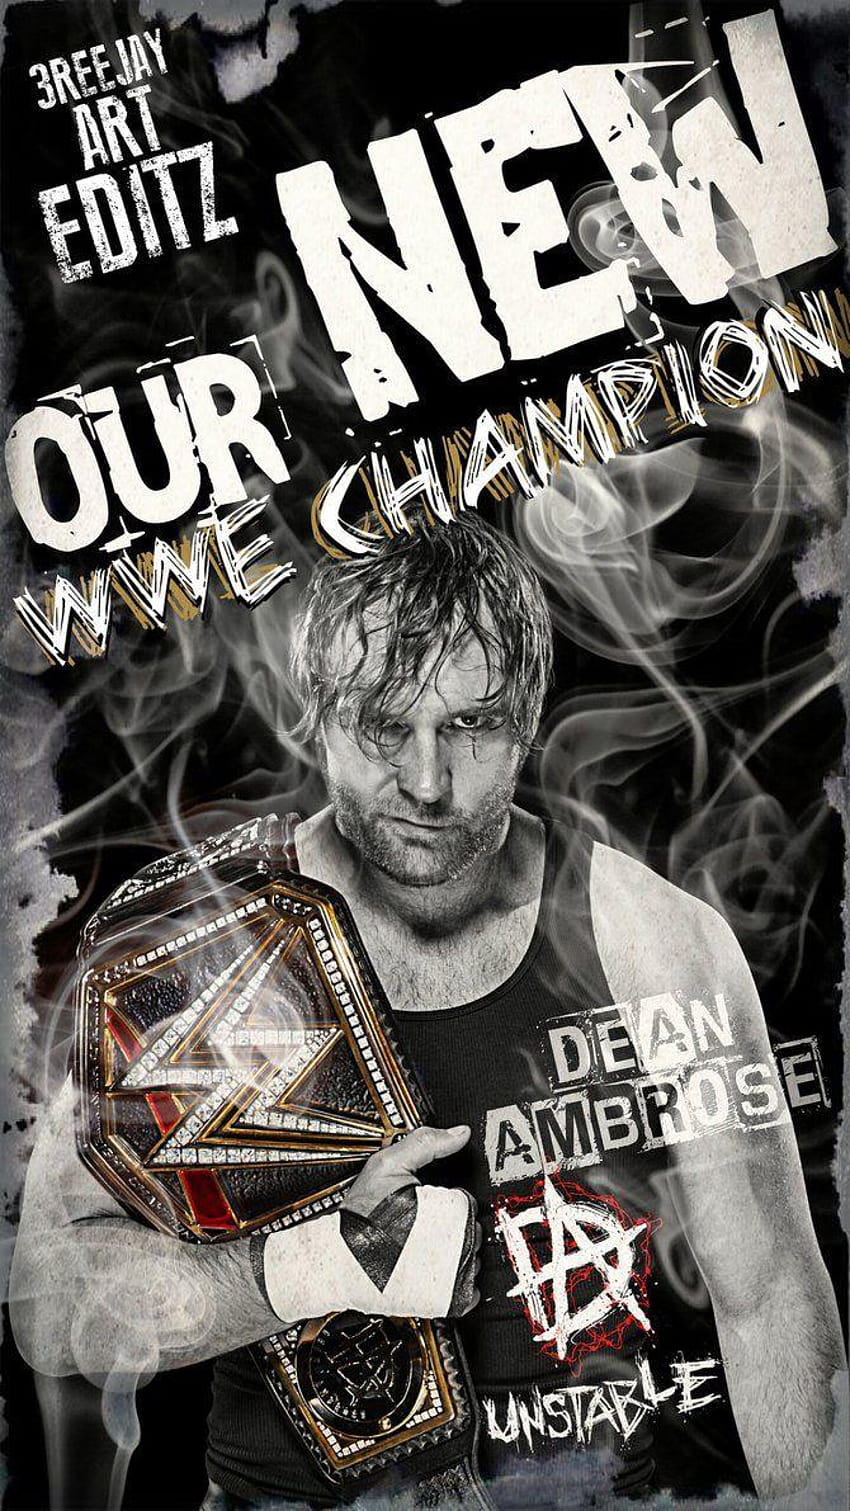 WWEディーン・アンブローズ 3REEJAYARTEDITSによる新しいWWEチャンピオン、ディーン・アンブローズのロゴ HD電話の壁紙